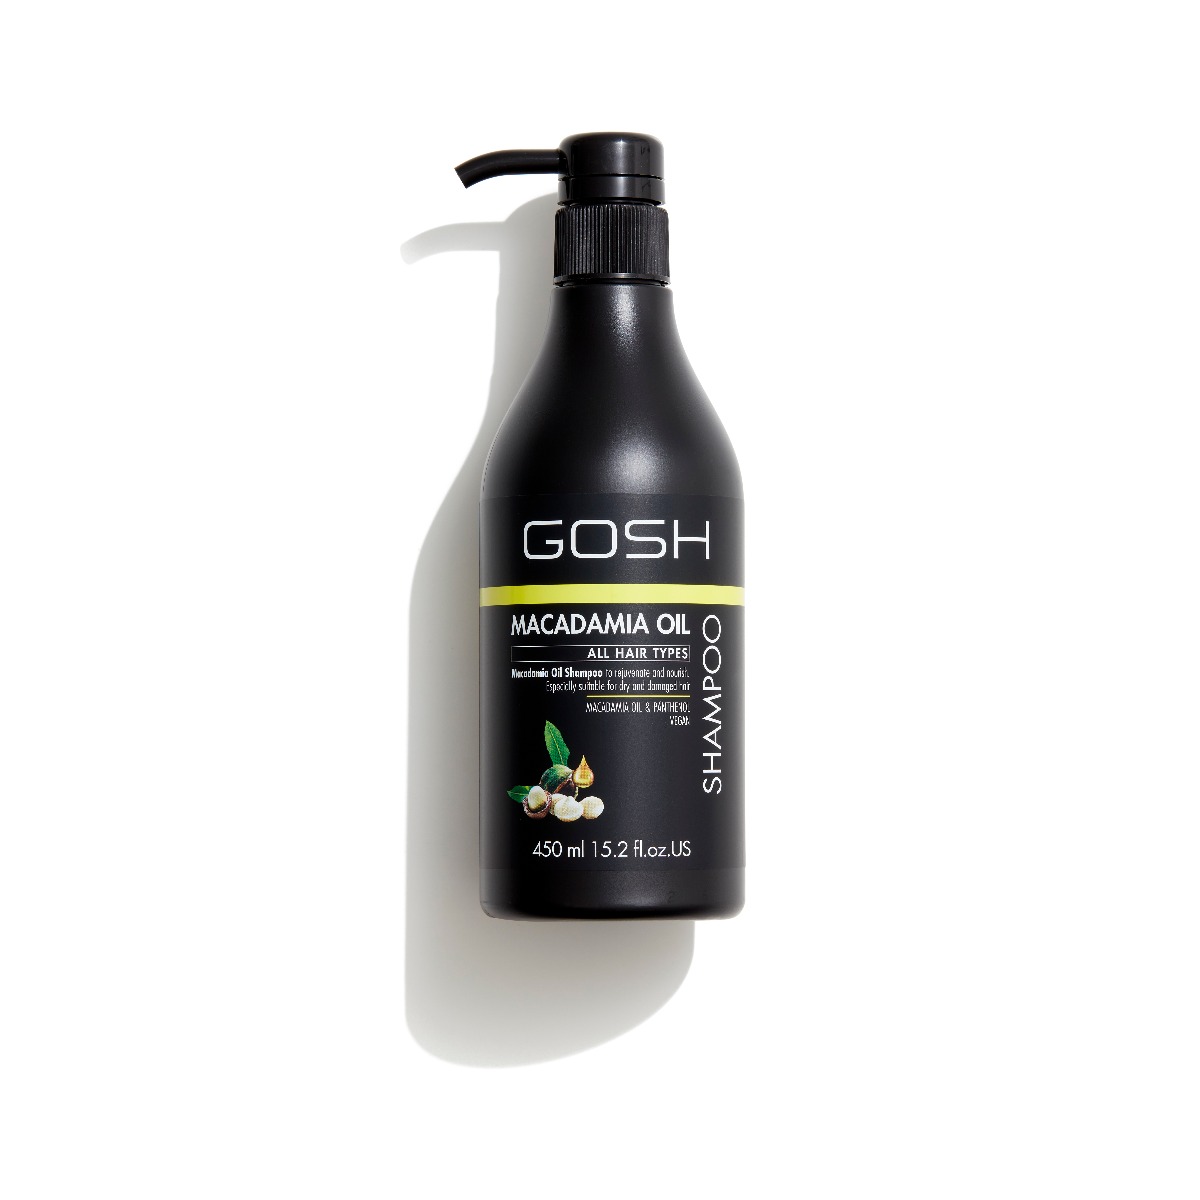 Billede af Hair Shampoo 450ml - Macadamia Oil hos Gosh Copenhagen